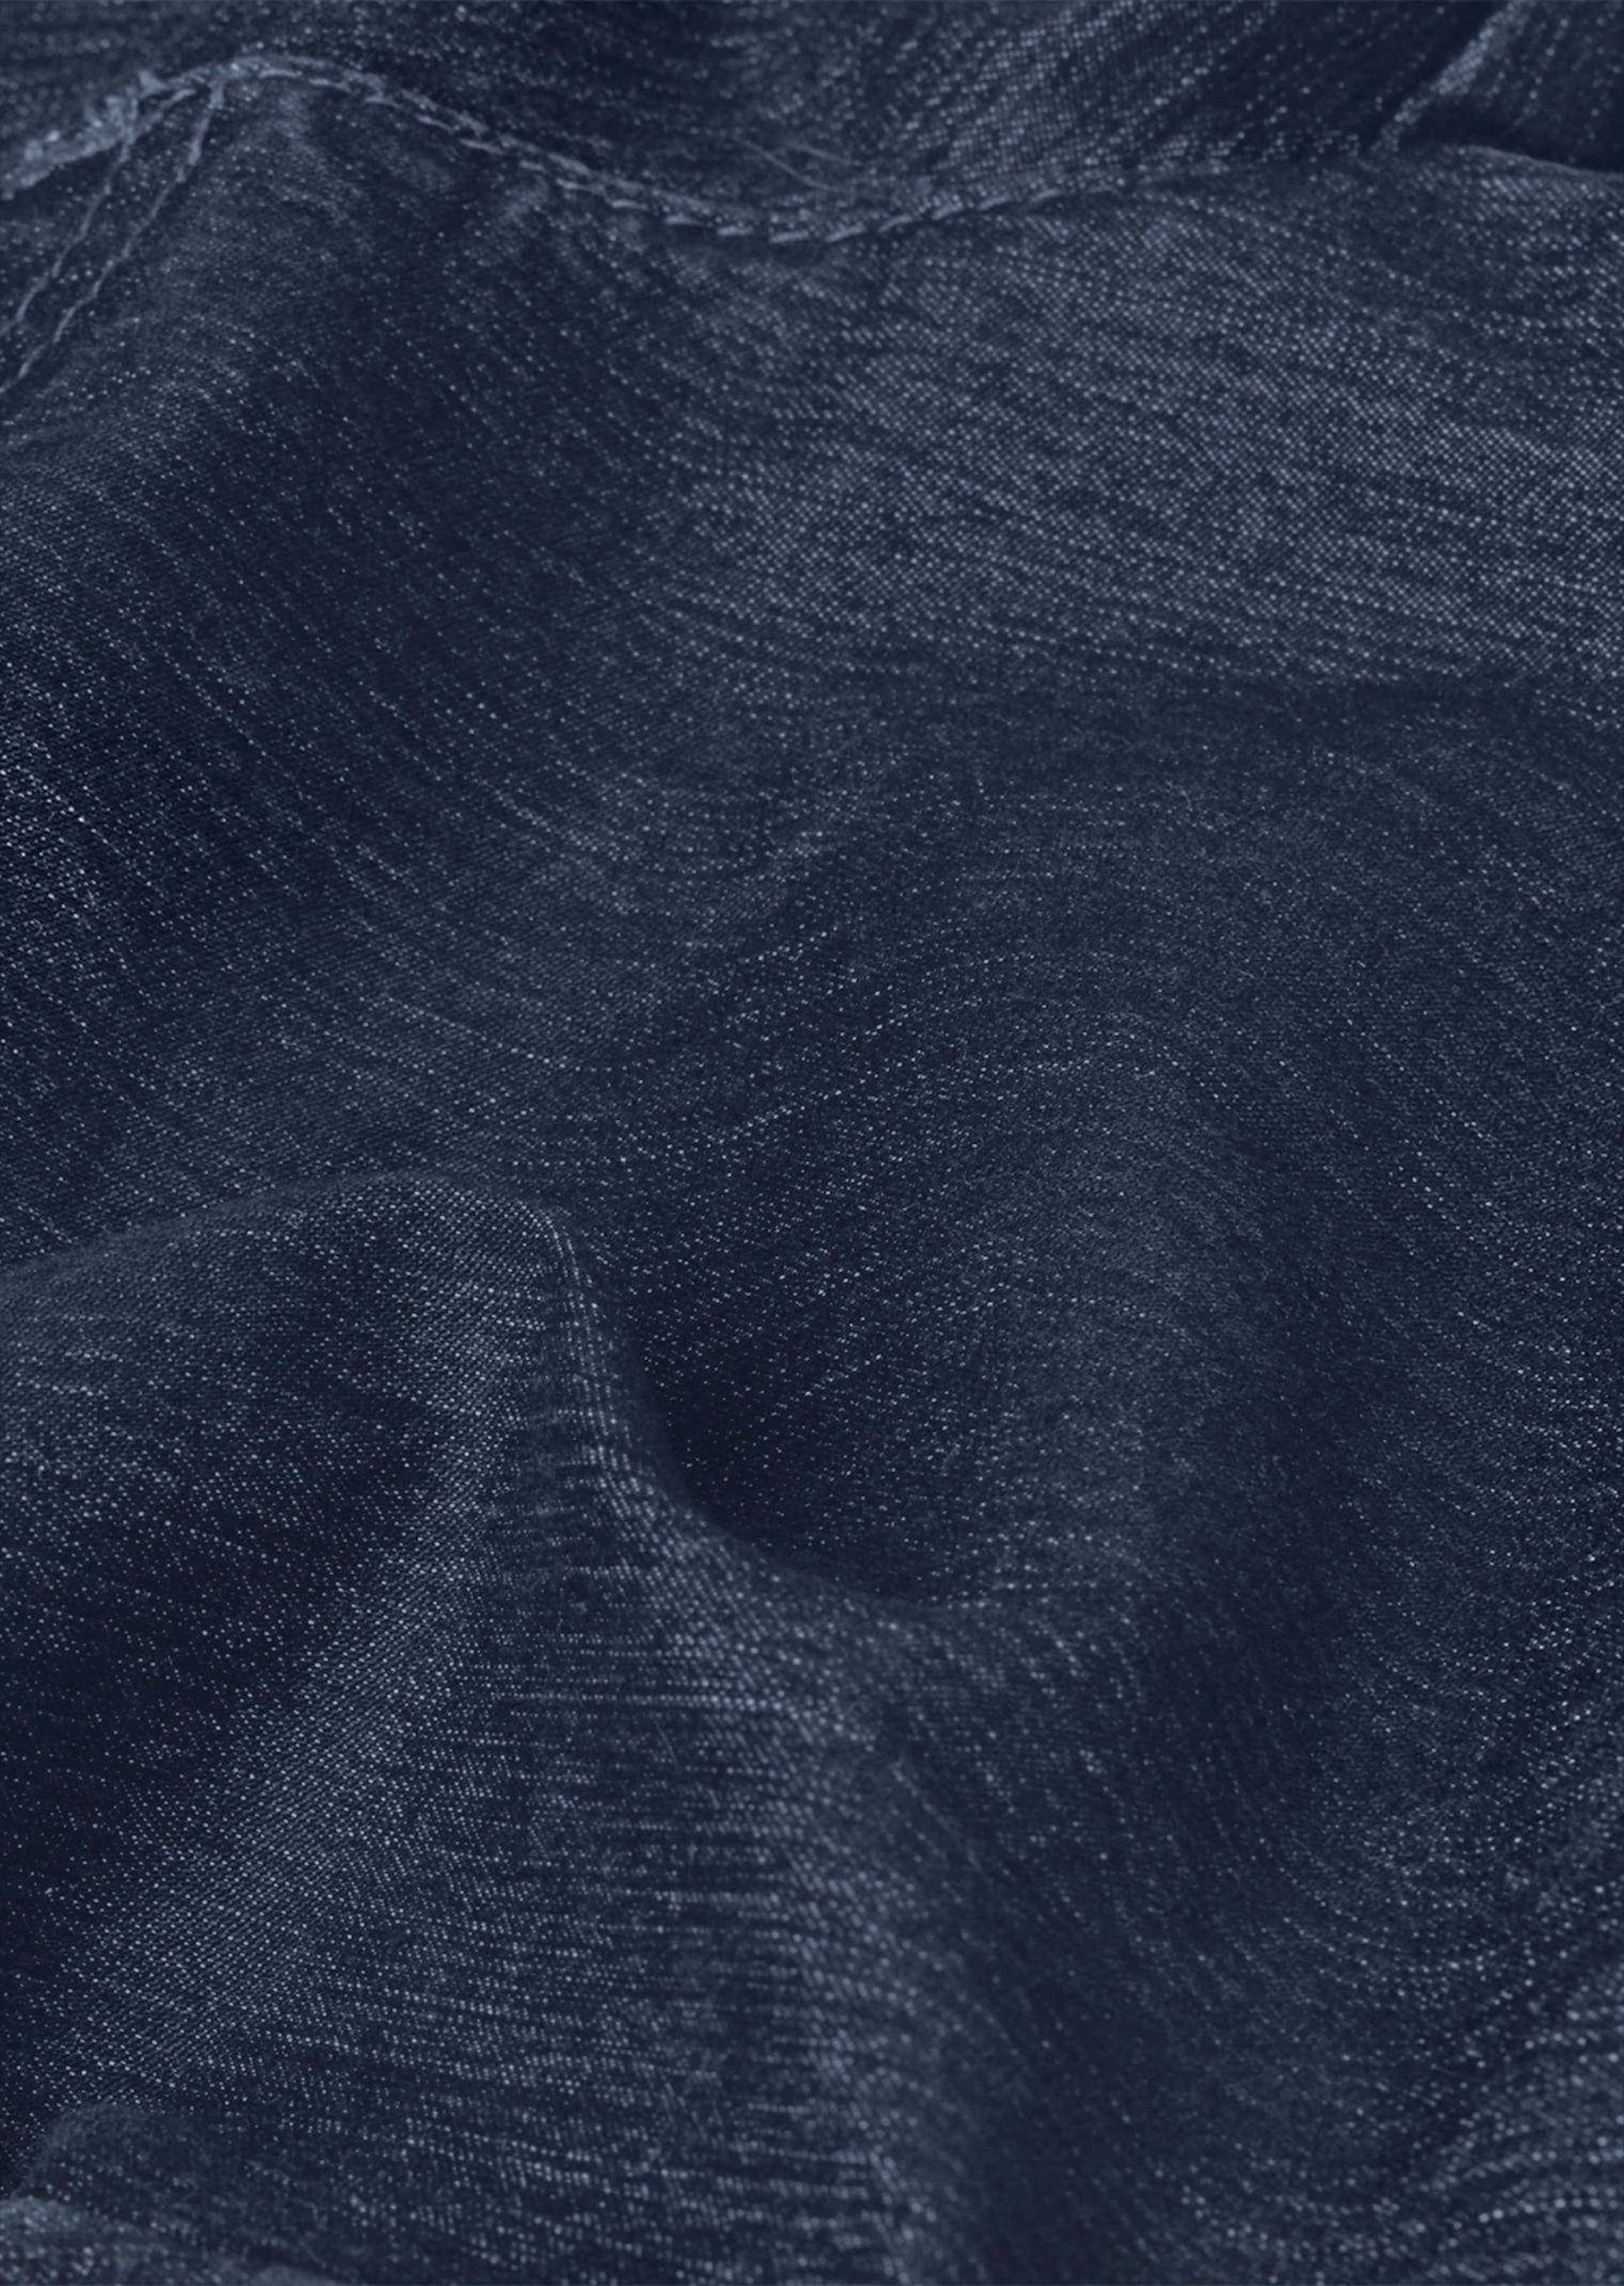 Jeansschlupfhose Edel MARTHA GOLDNER Jeans dunkelblau geschmückte Bequeme